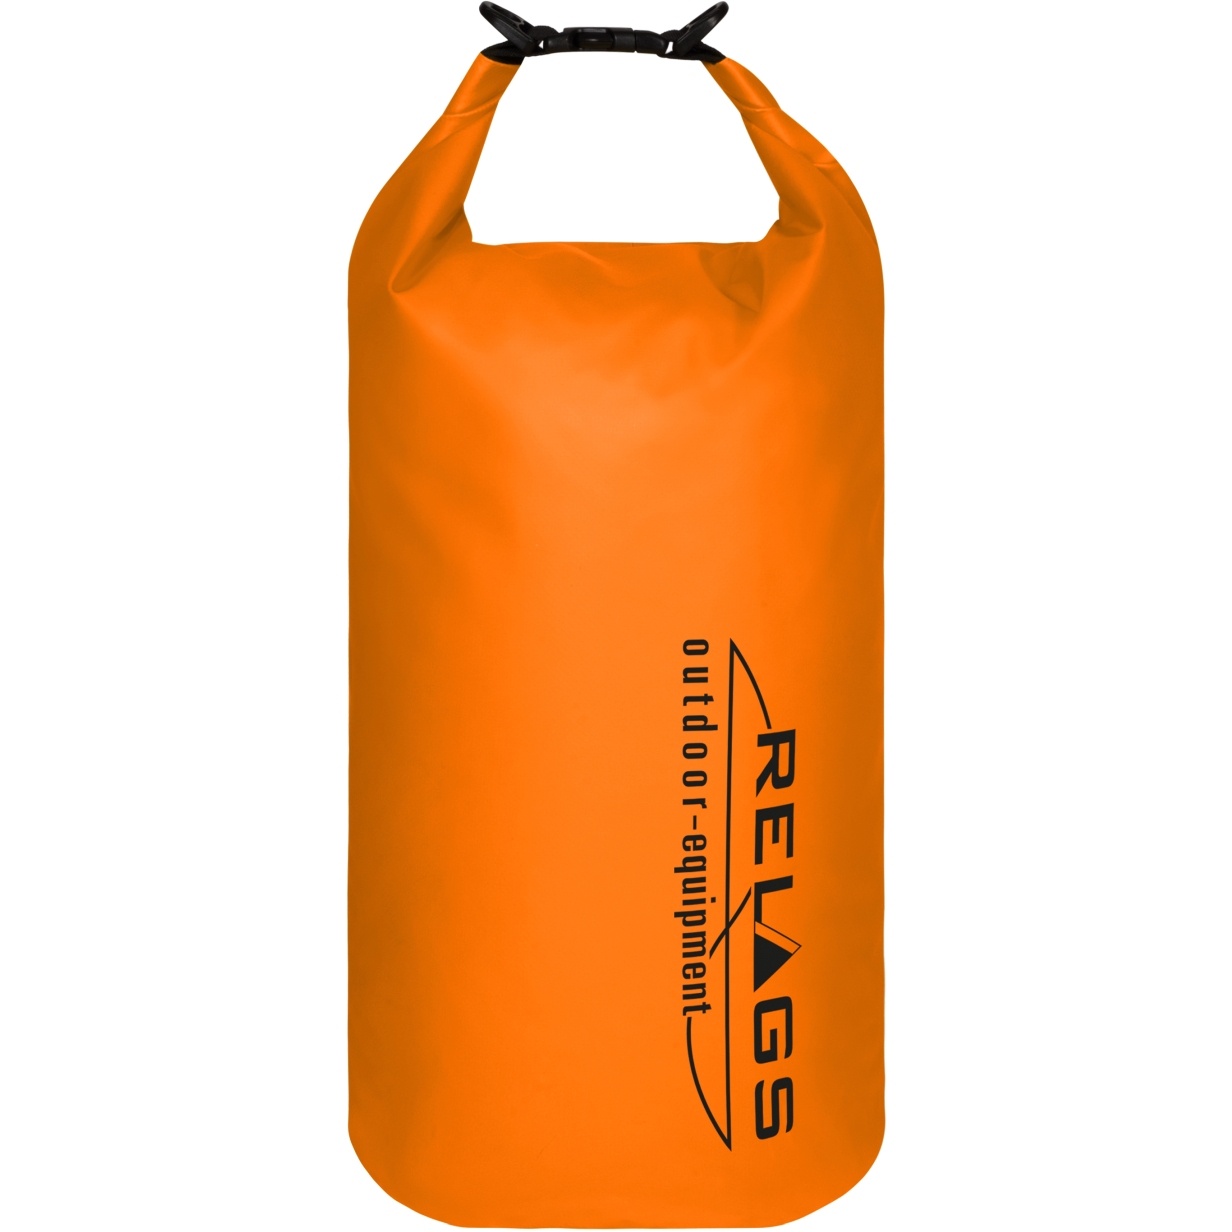 Produktbild von basic NATURE | Relags Packsack 500D - 20L - orange